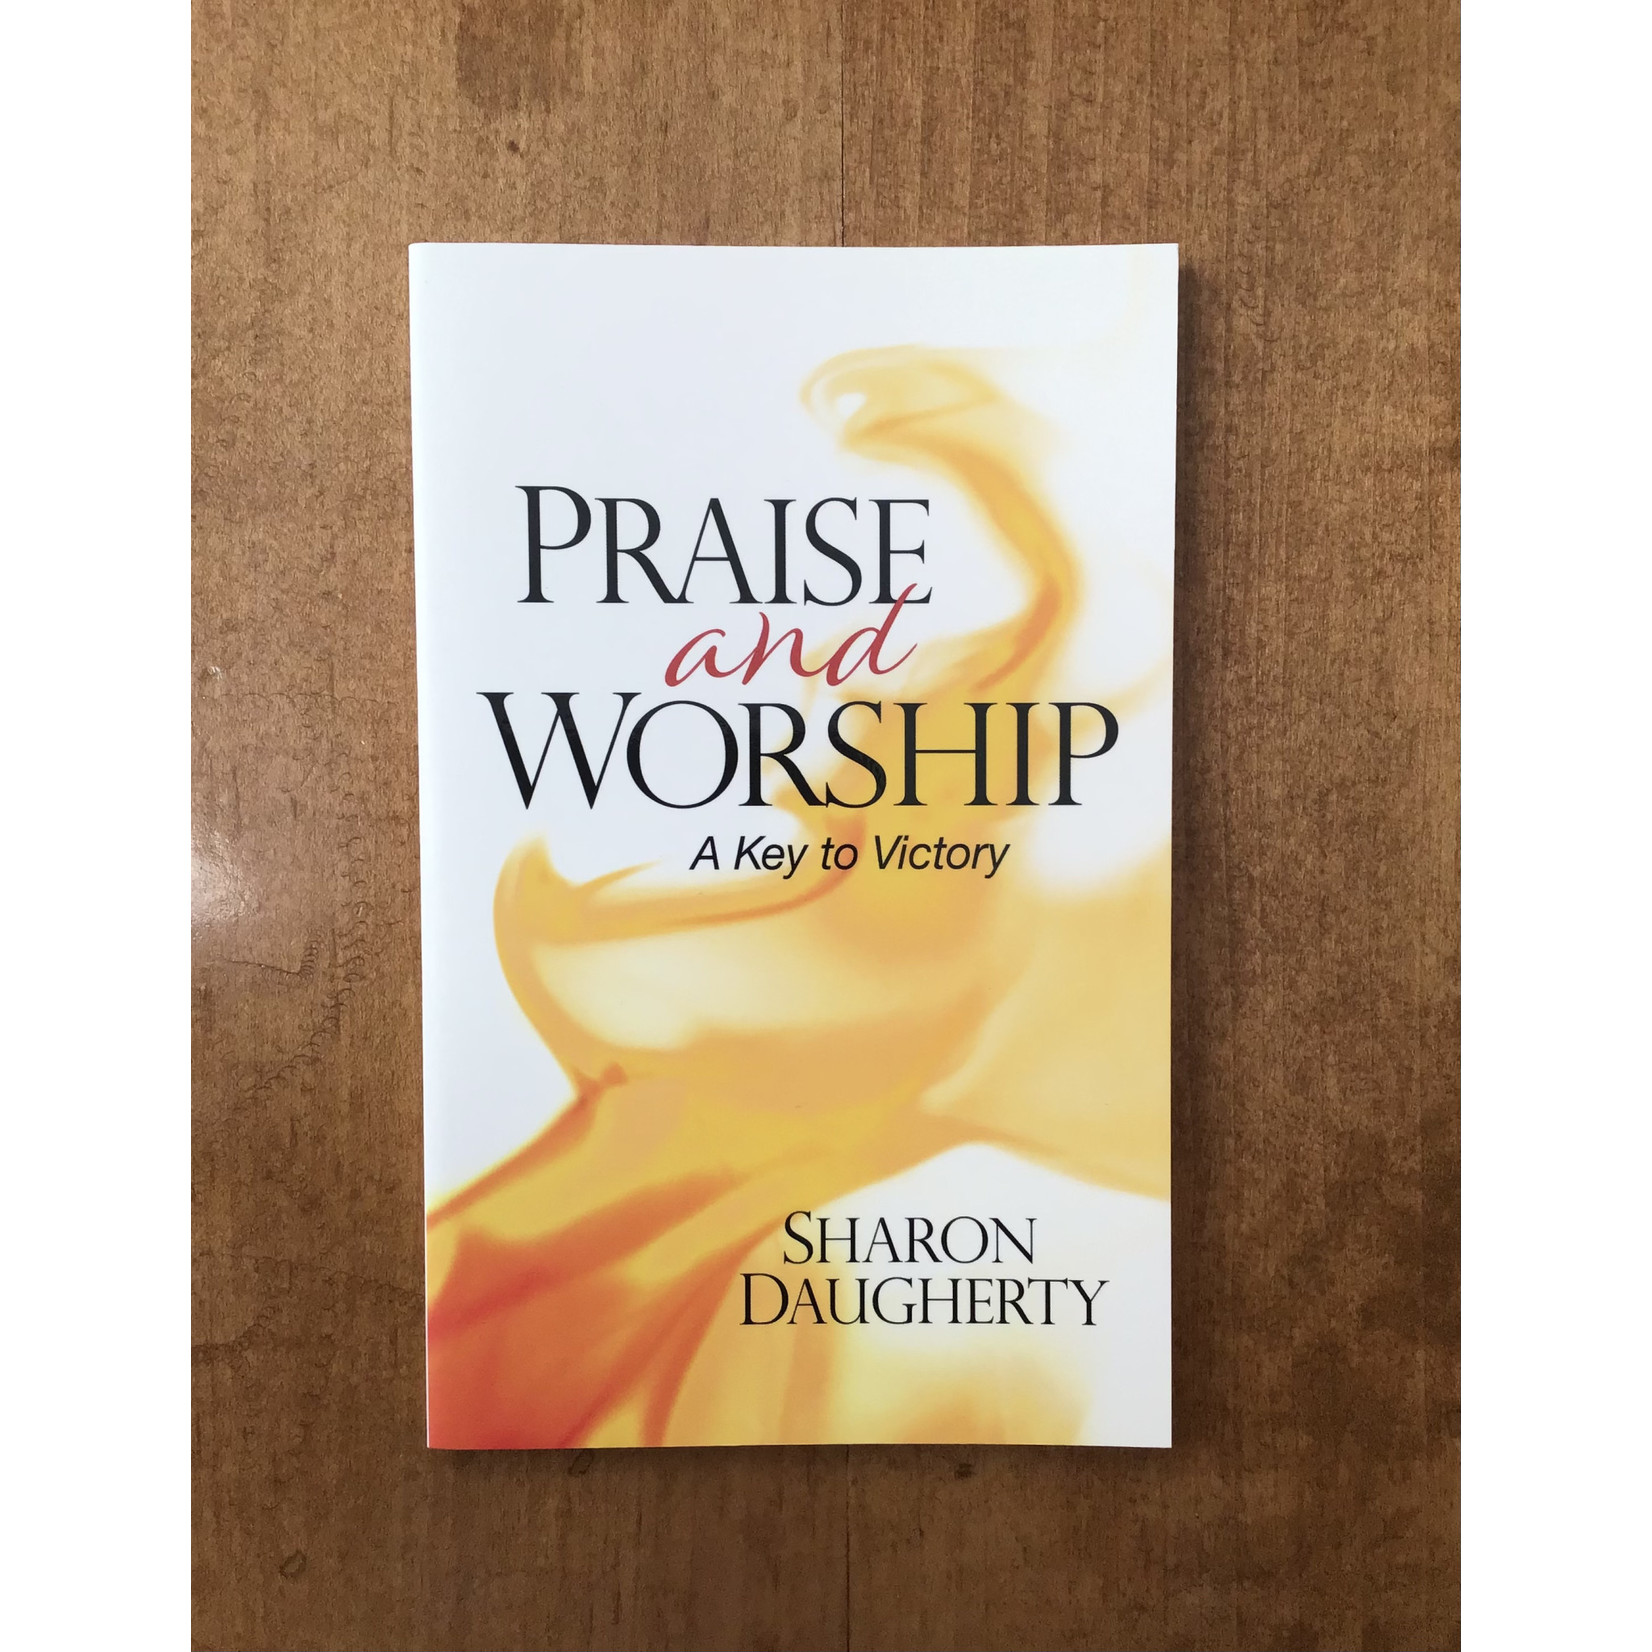 PRAISE AND WORSHIP - DAUGHERTY, SHARON